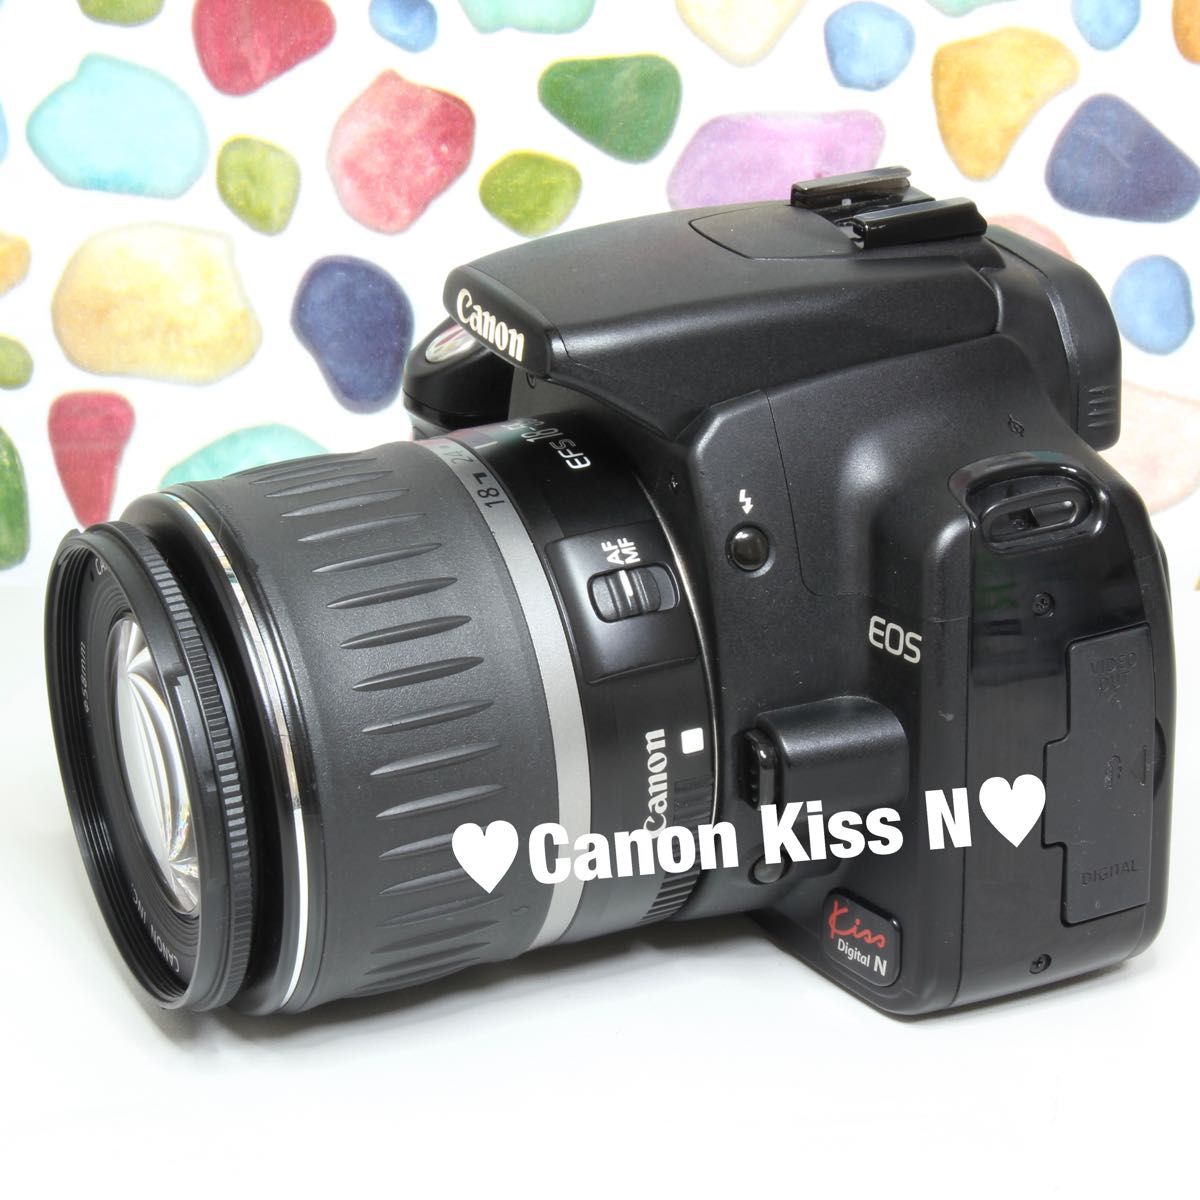 ◇Canon キャノン EOS KISS digital N ◇はじめての一眼レフ ◇大人気モデル♪ ★Wi-Fiセット★ カメラ デジタル一眼カメラ